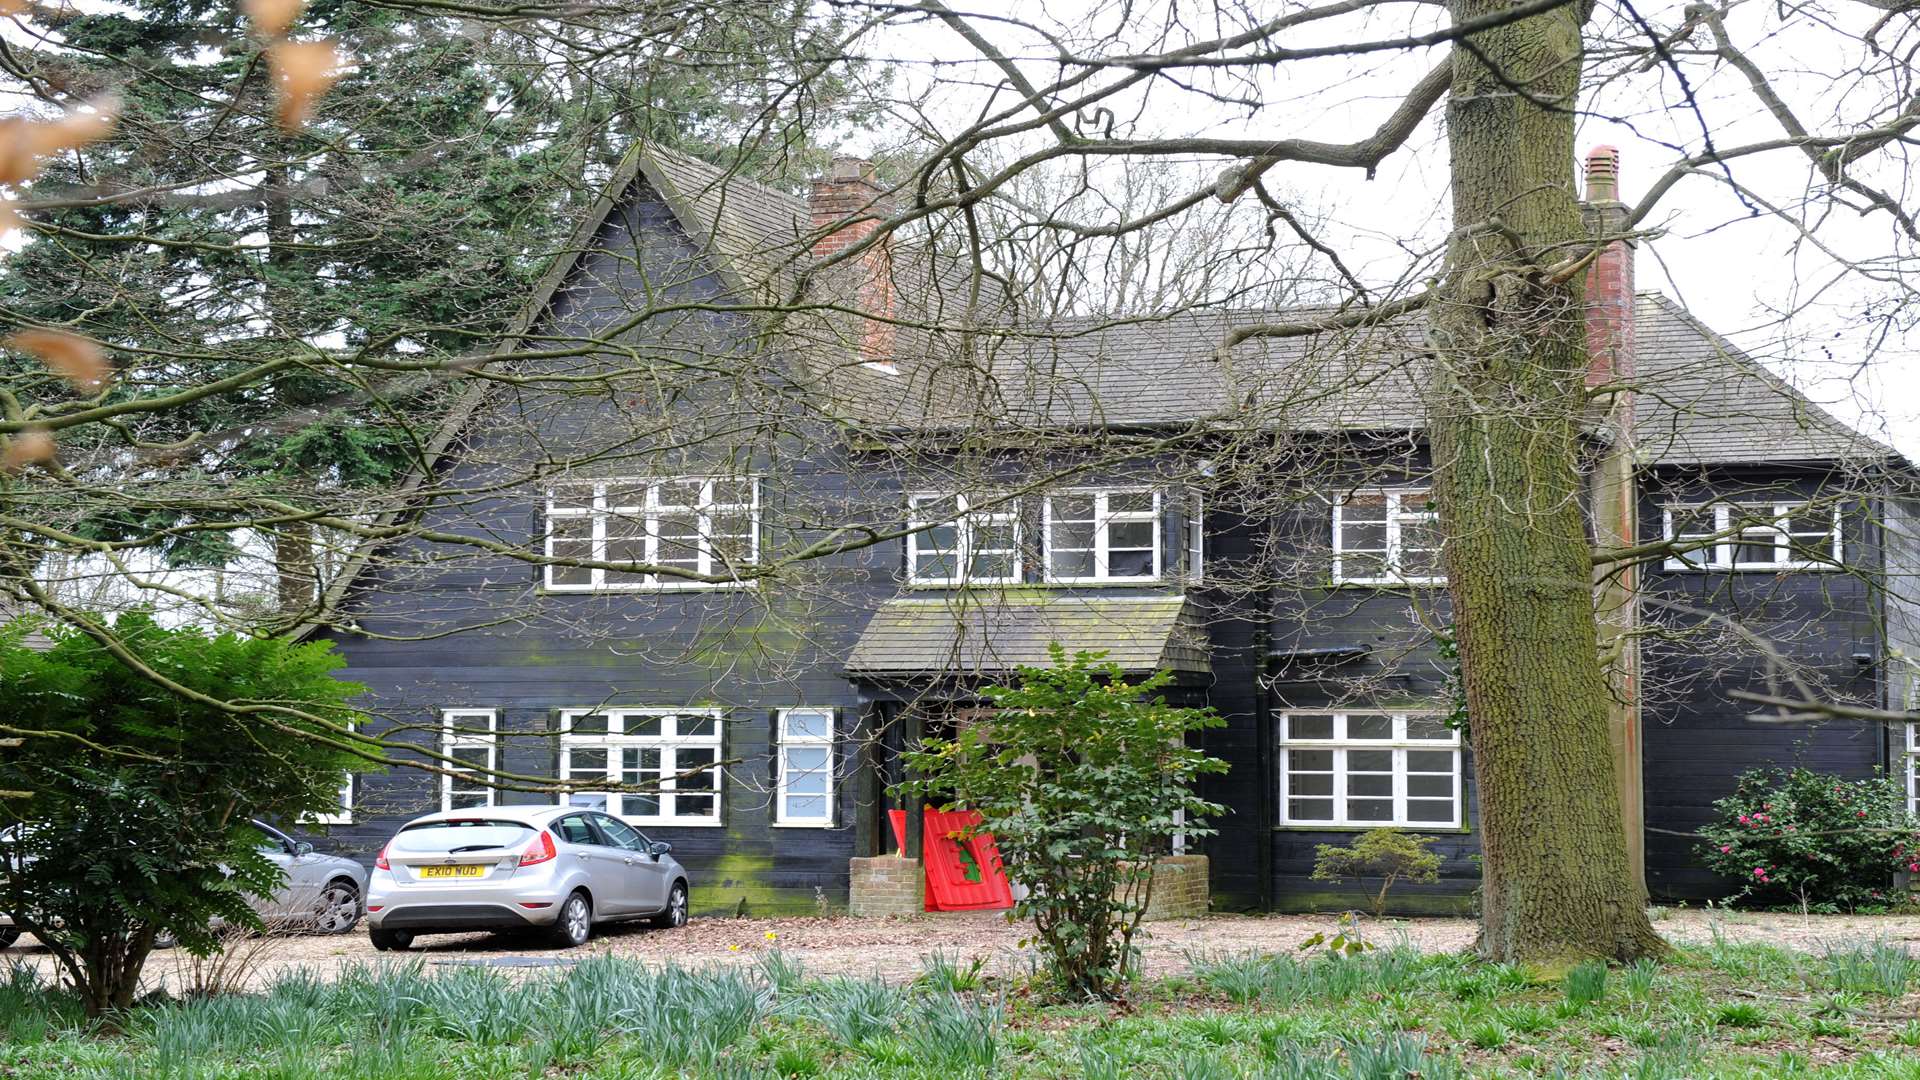 Peaches Geldof's former home in Wrotham